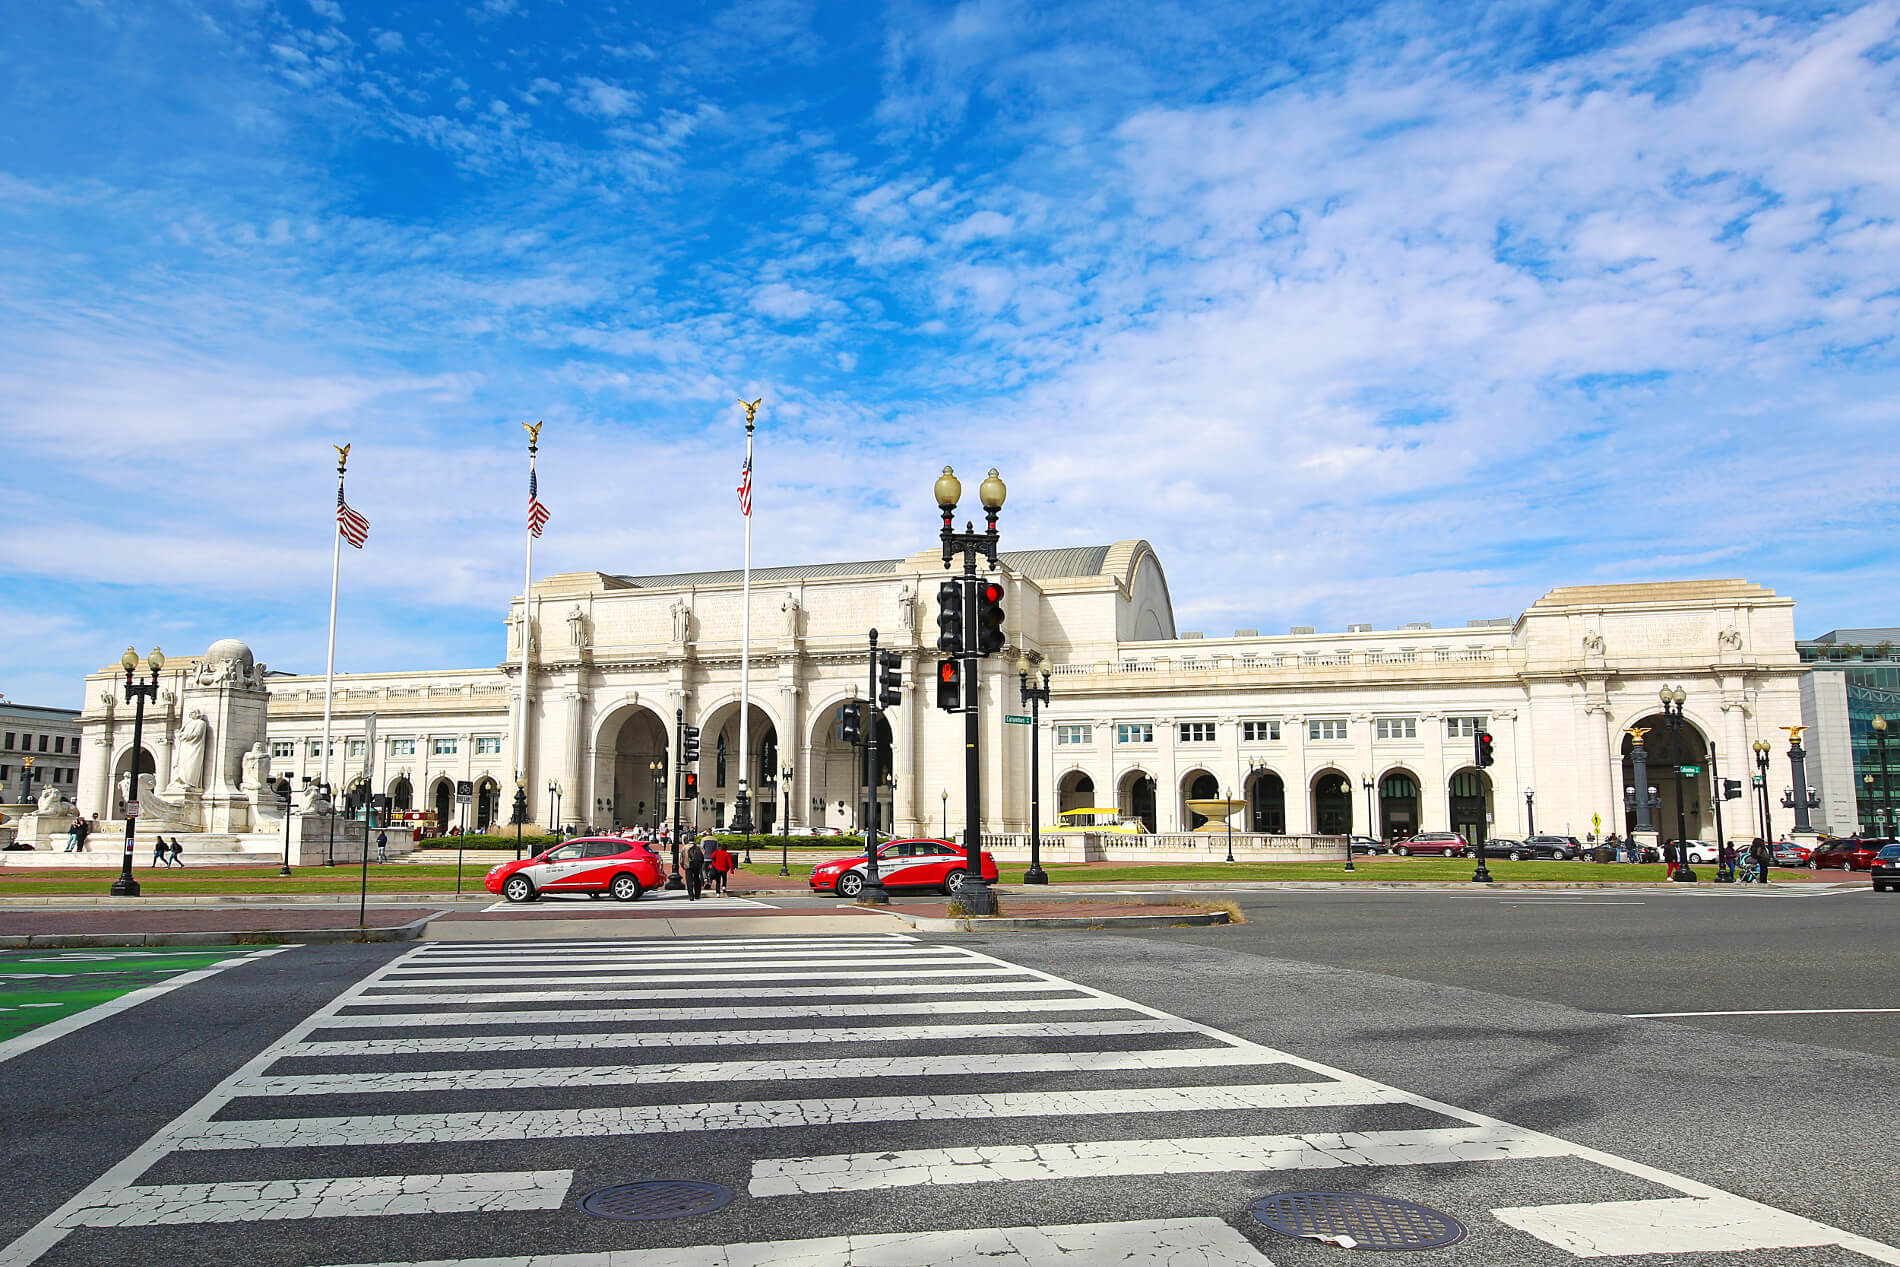 Exterior of Union Station in Washington DC